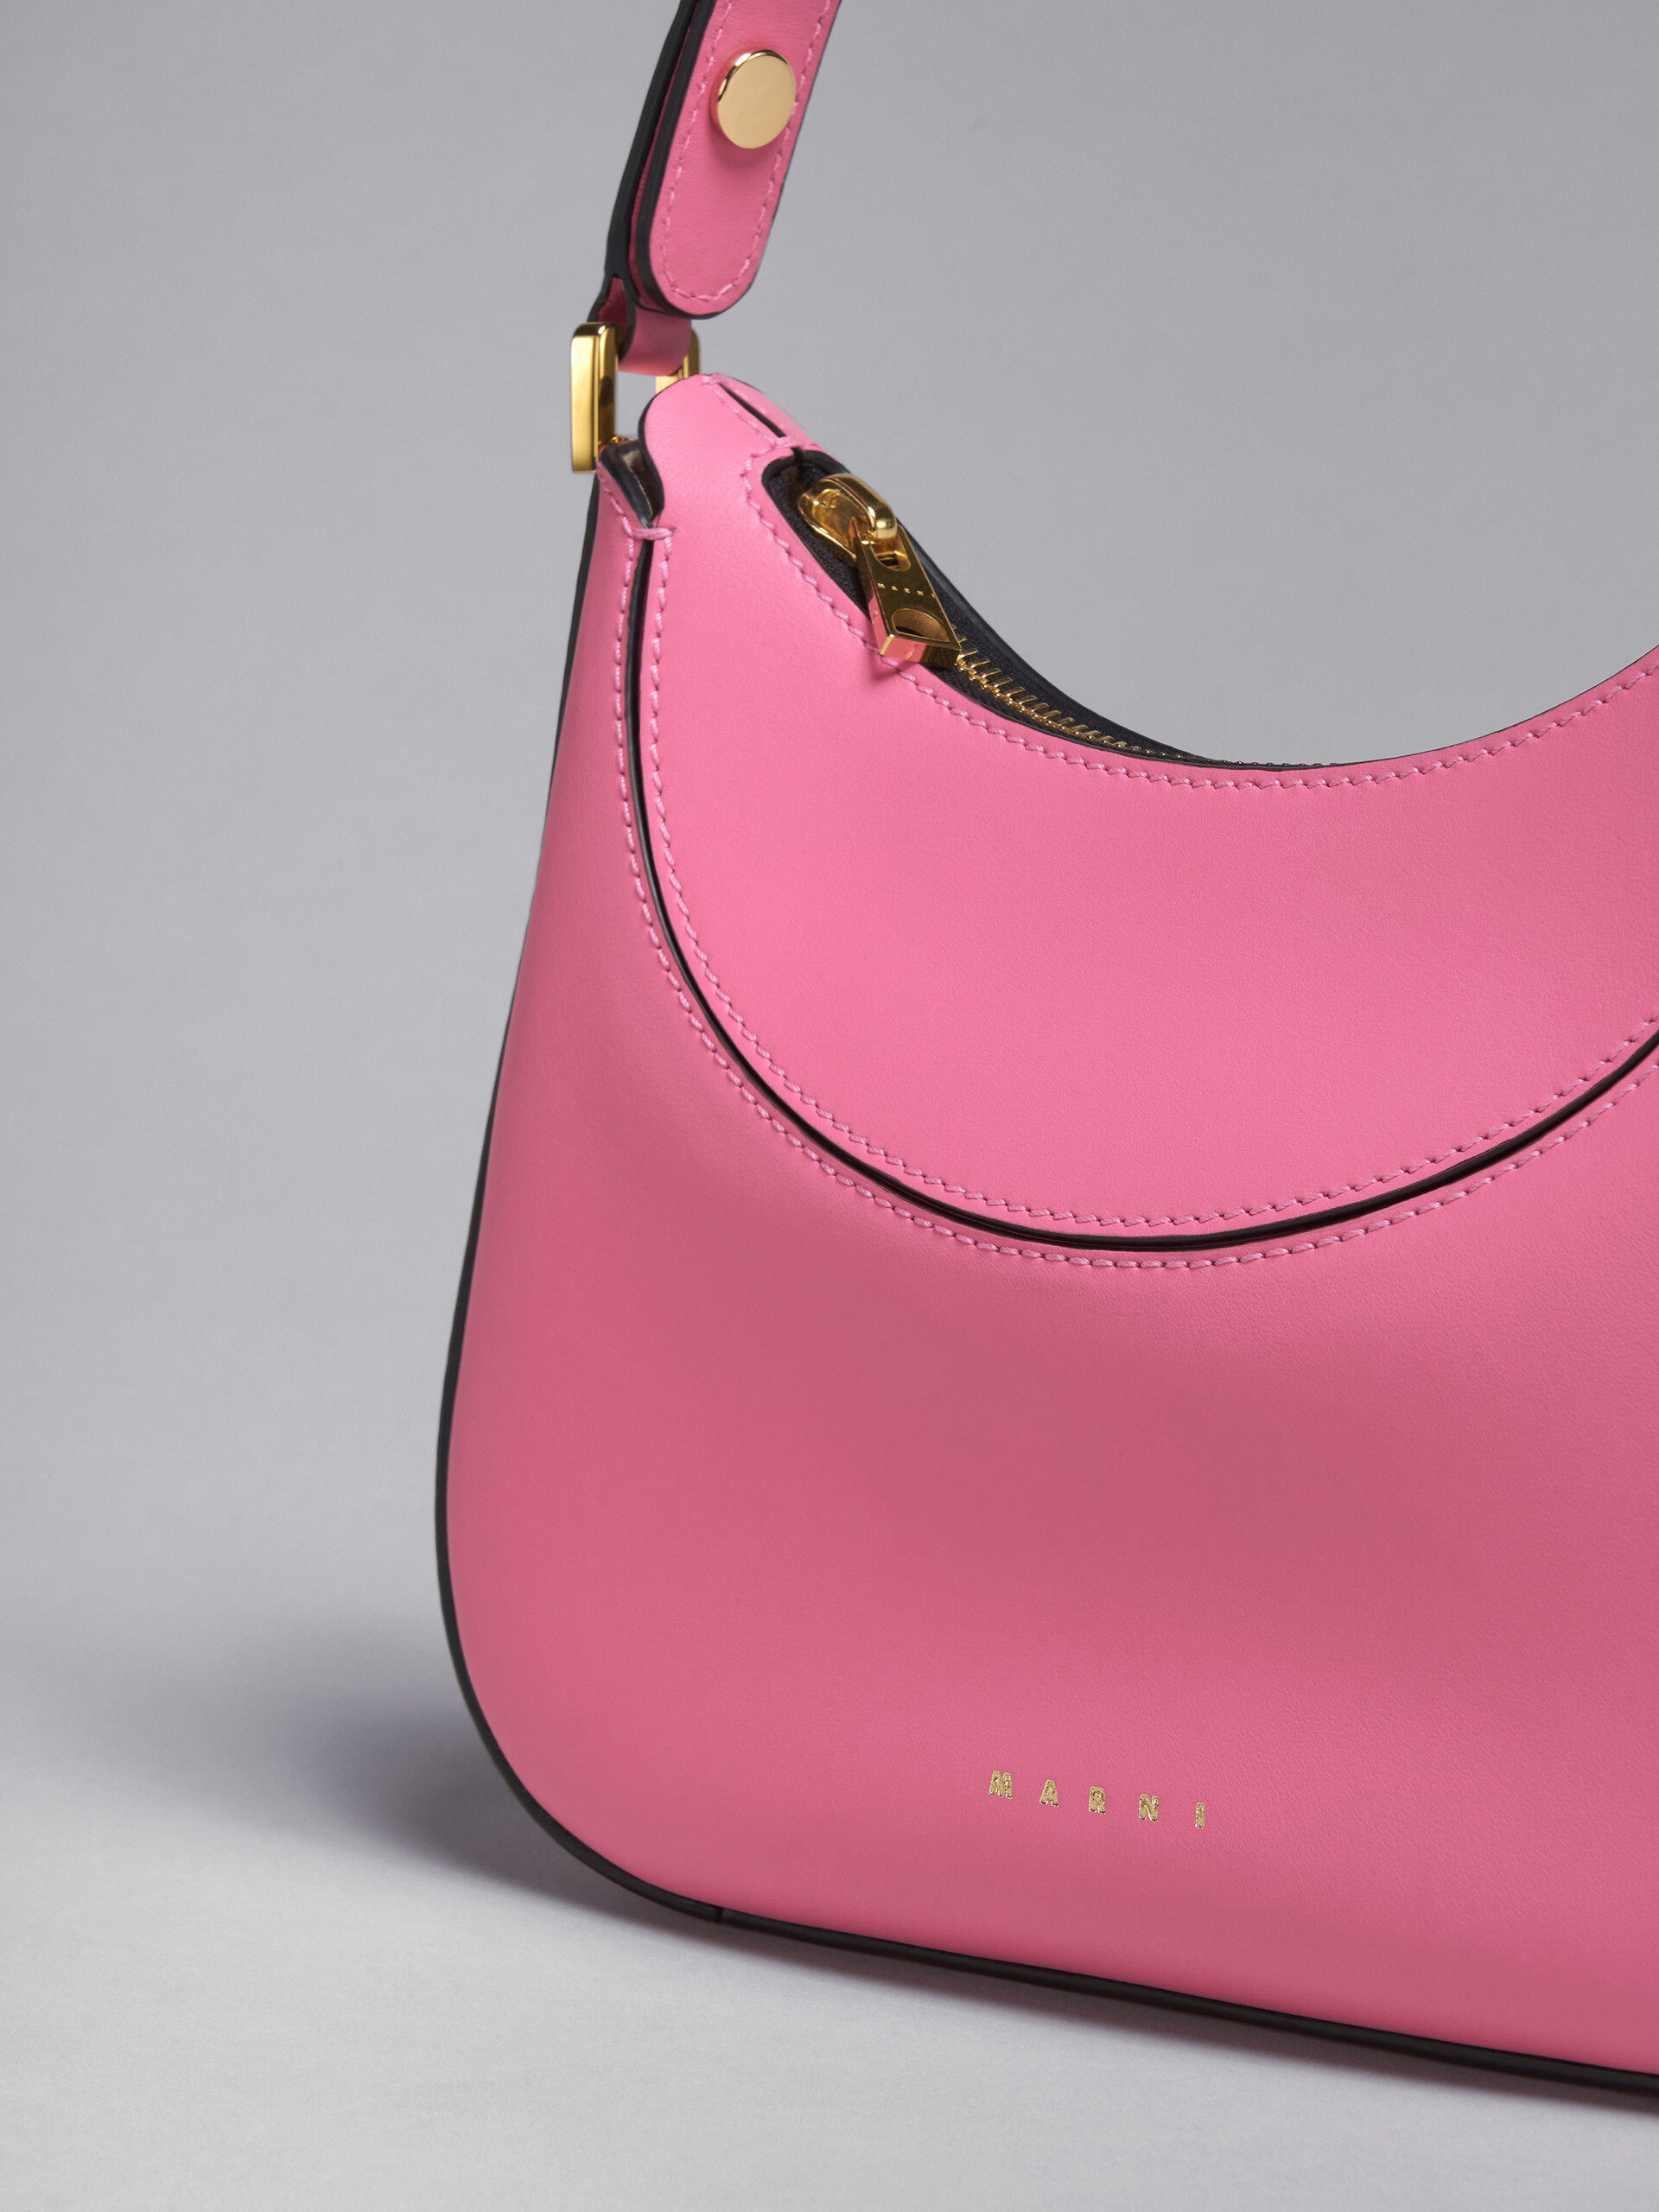 Milano mini bag in pink leather - Handbag - Image 5